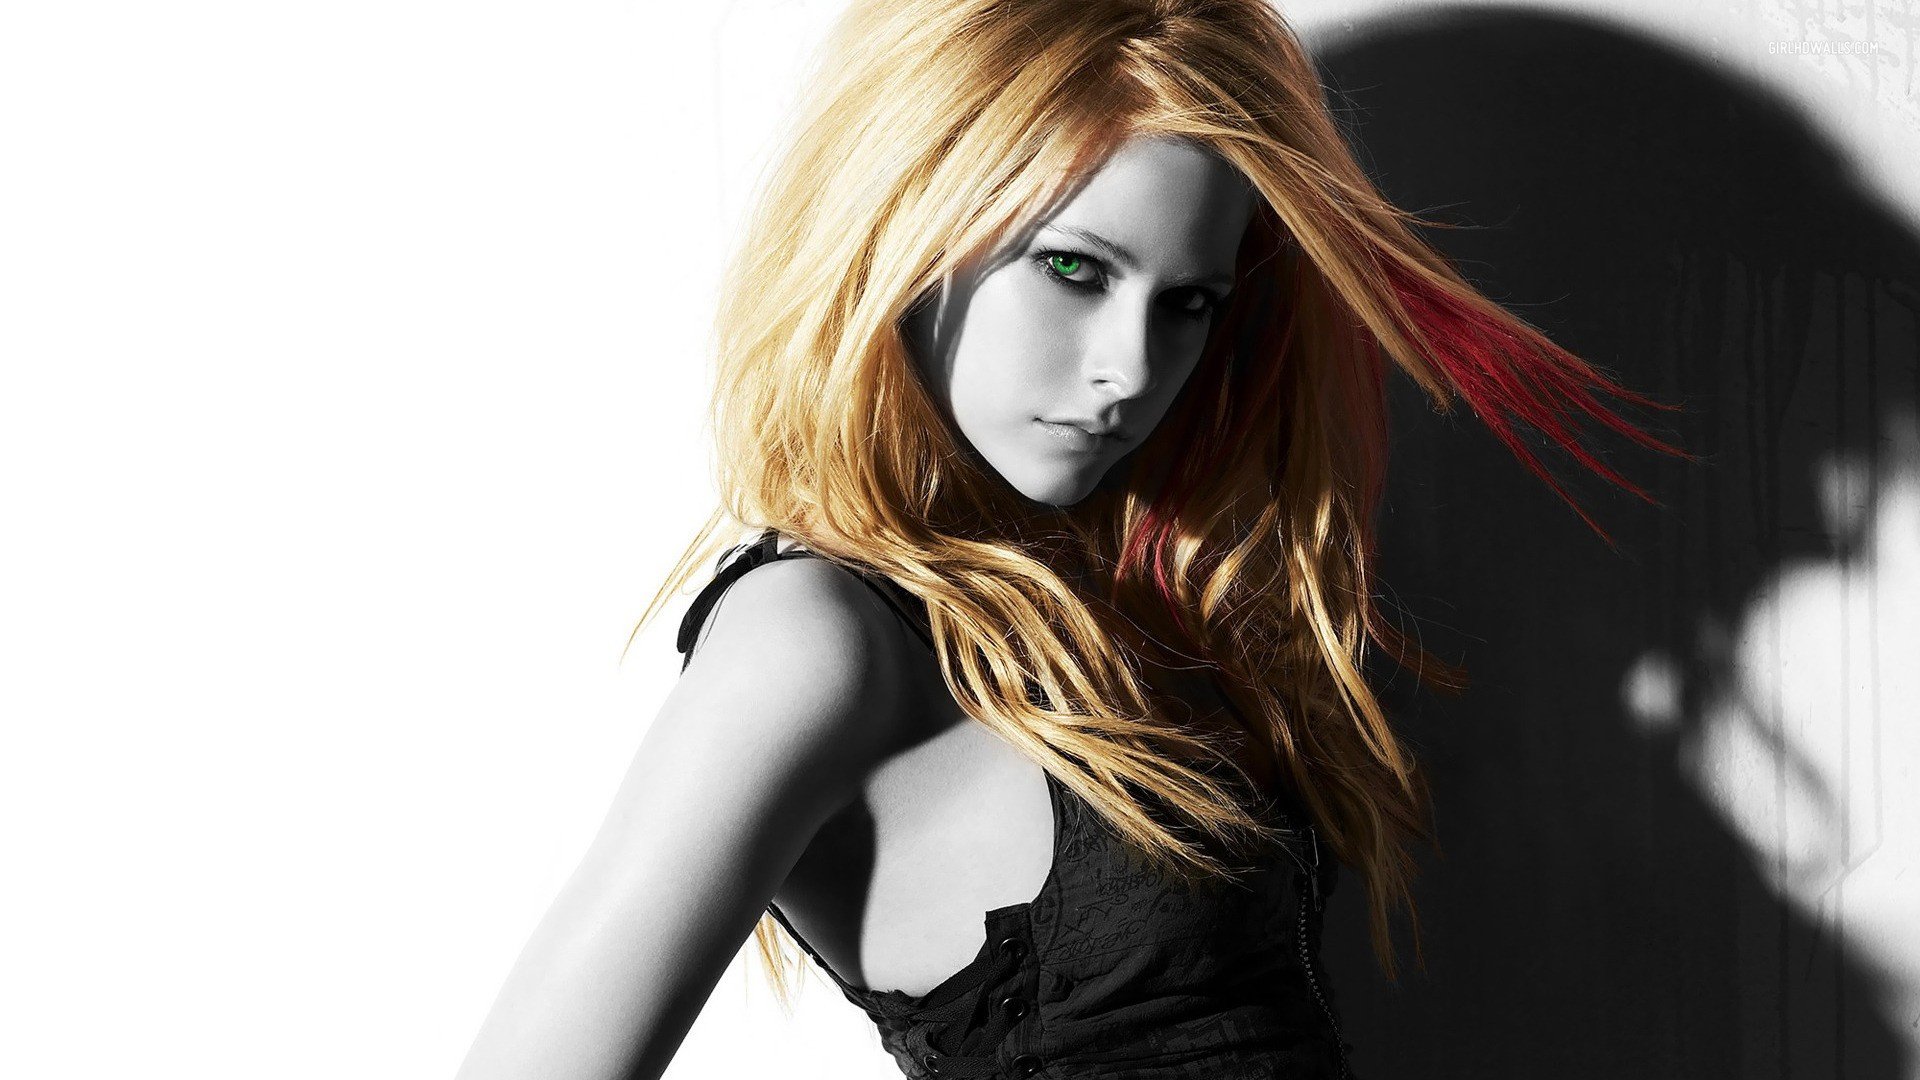 Free download Avril Lavigne wallpaper ID:71385 1080p for computer